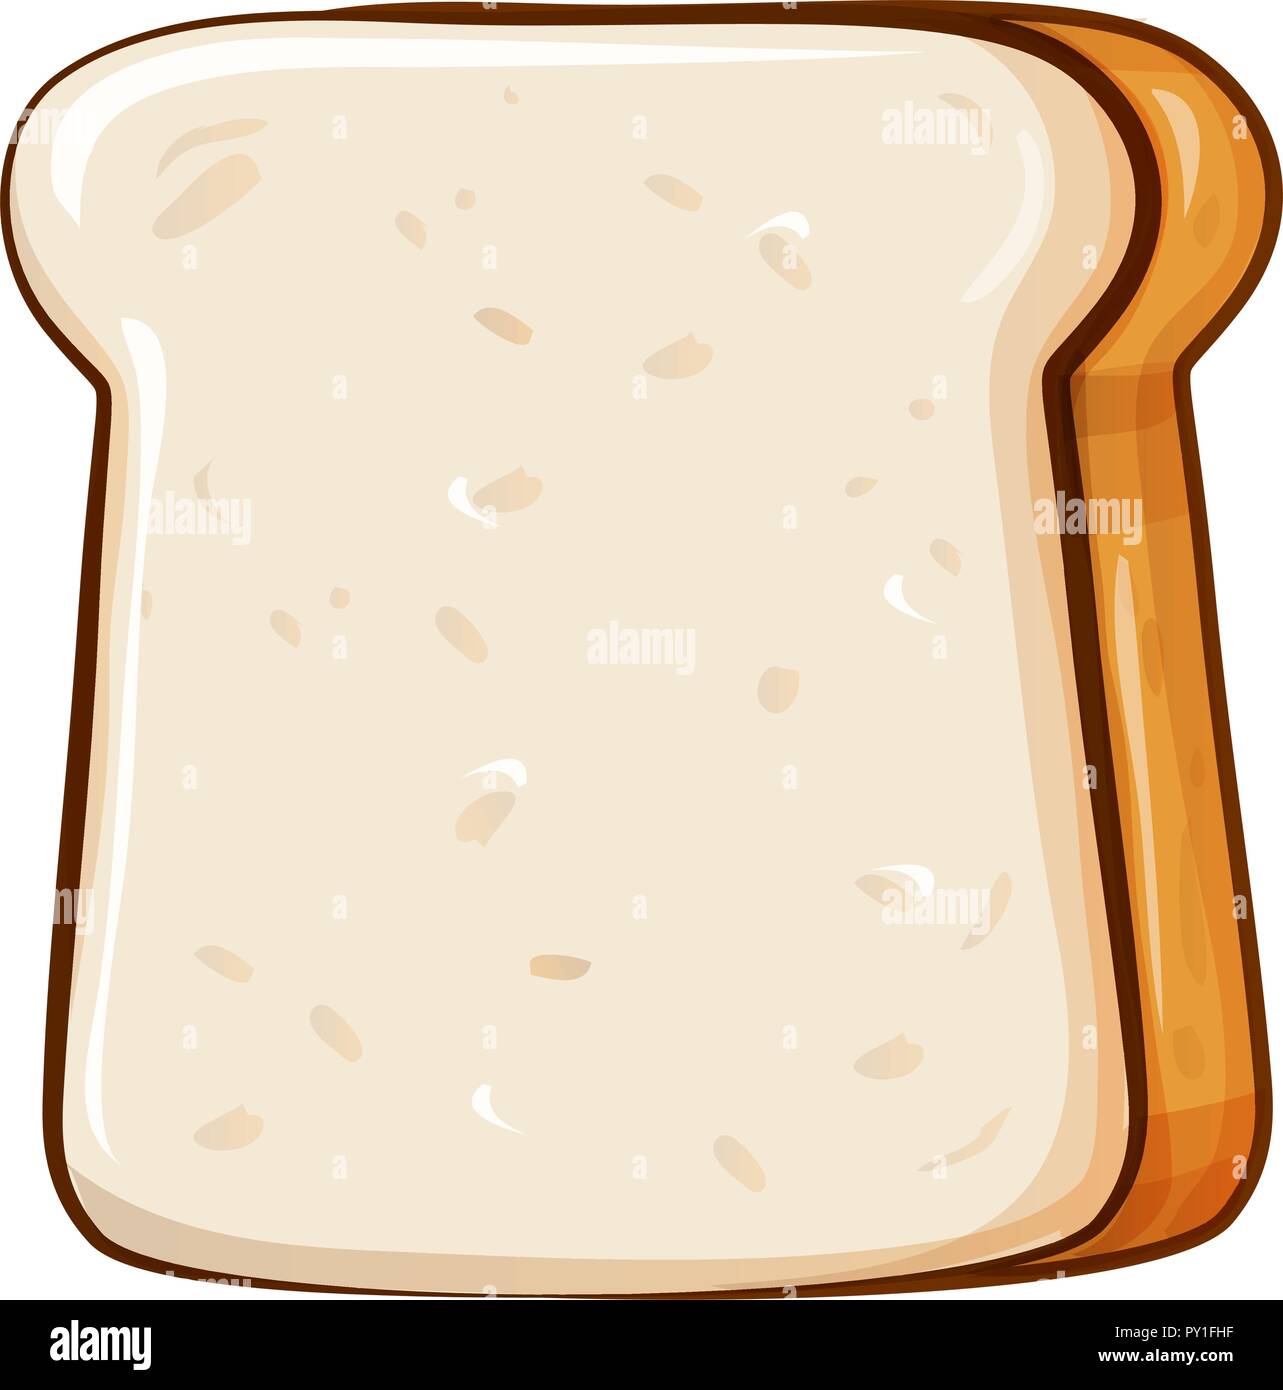 Fresh bread, toast for breakfast. Made in cartoon style. Stock Vector